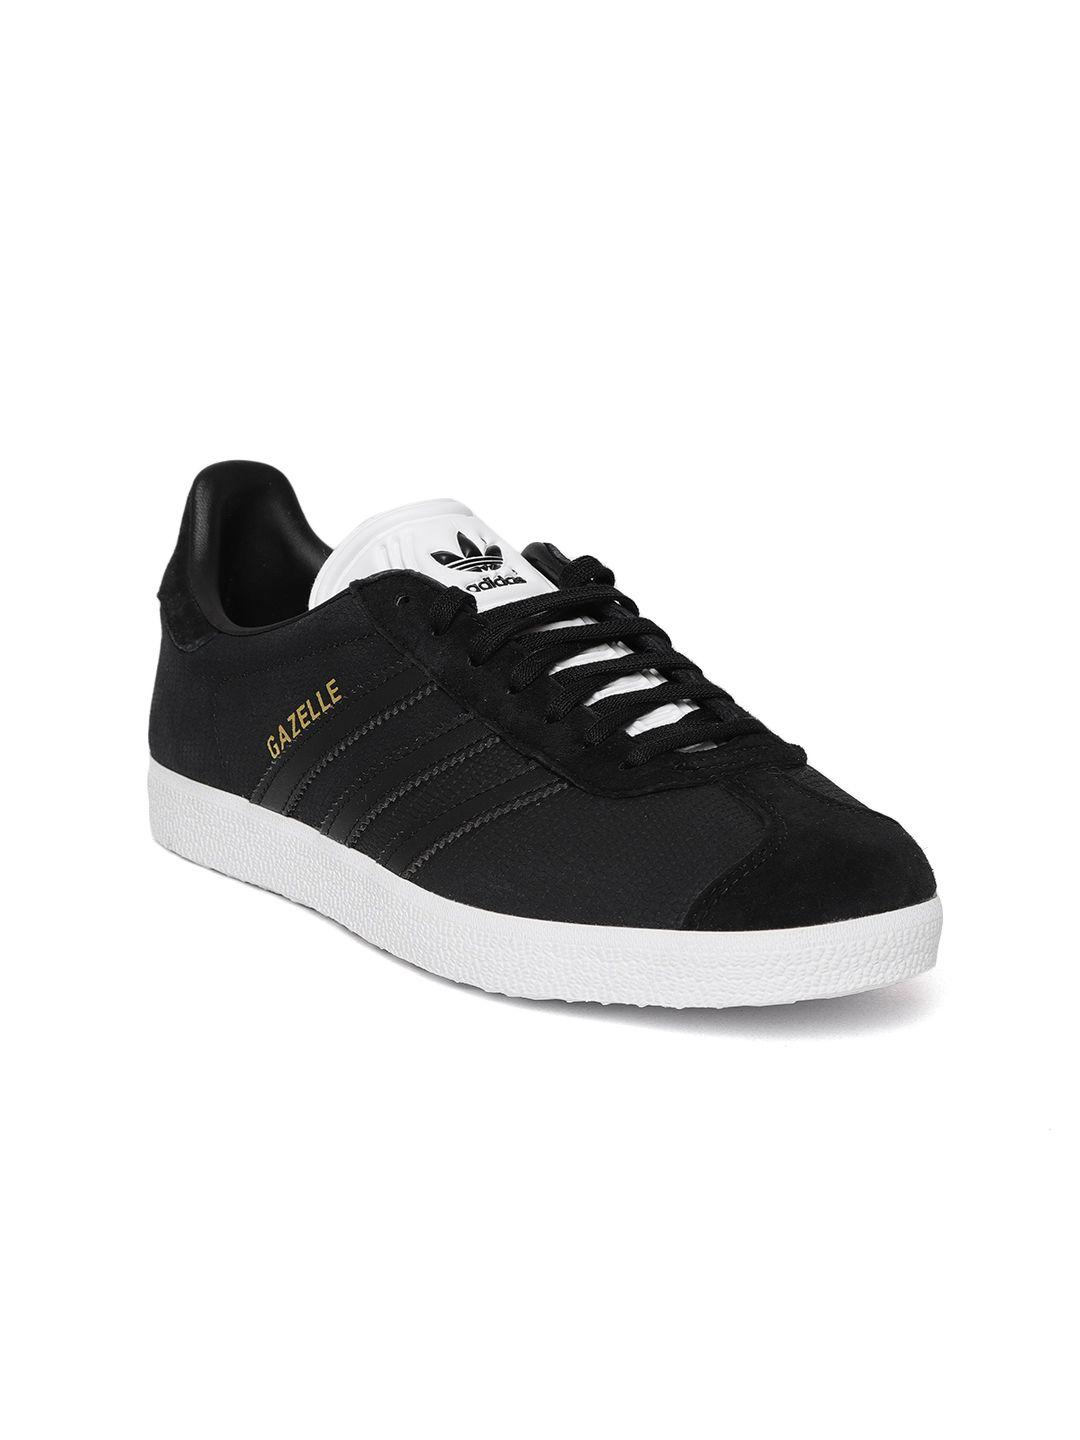 adidas-originals-women-black-gazelle-snakeskin-texture-leather-sneakers